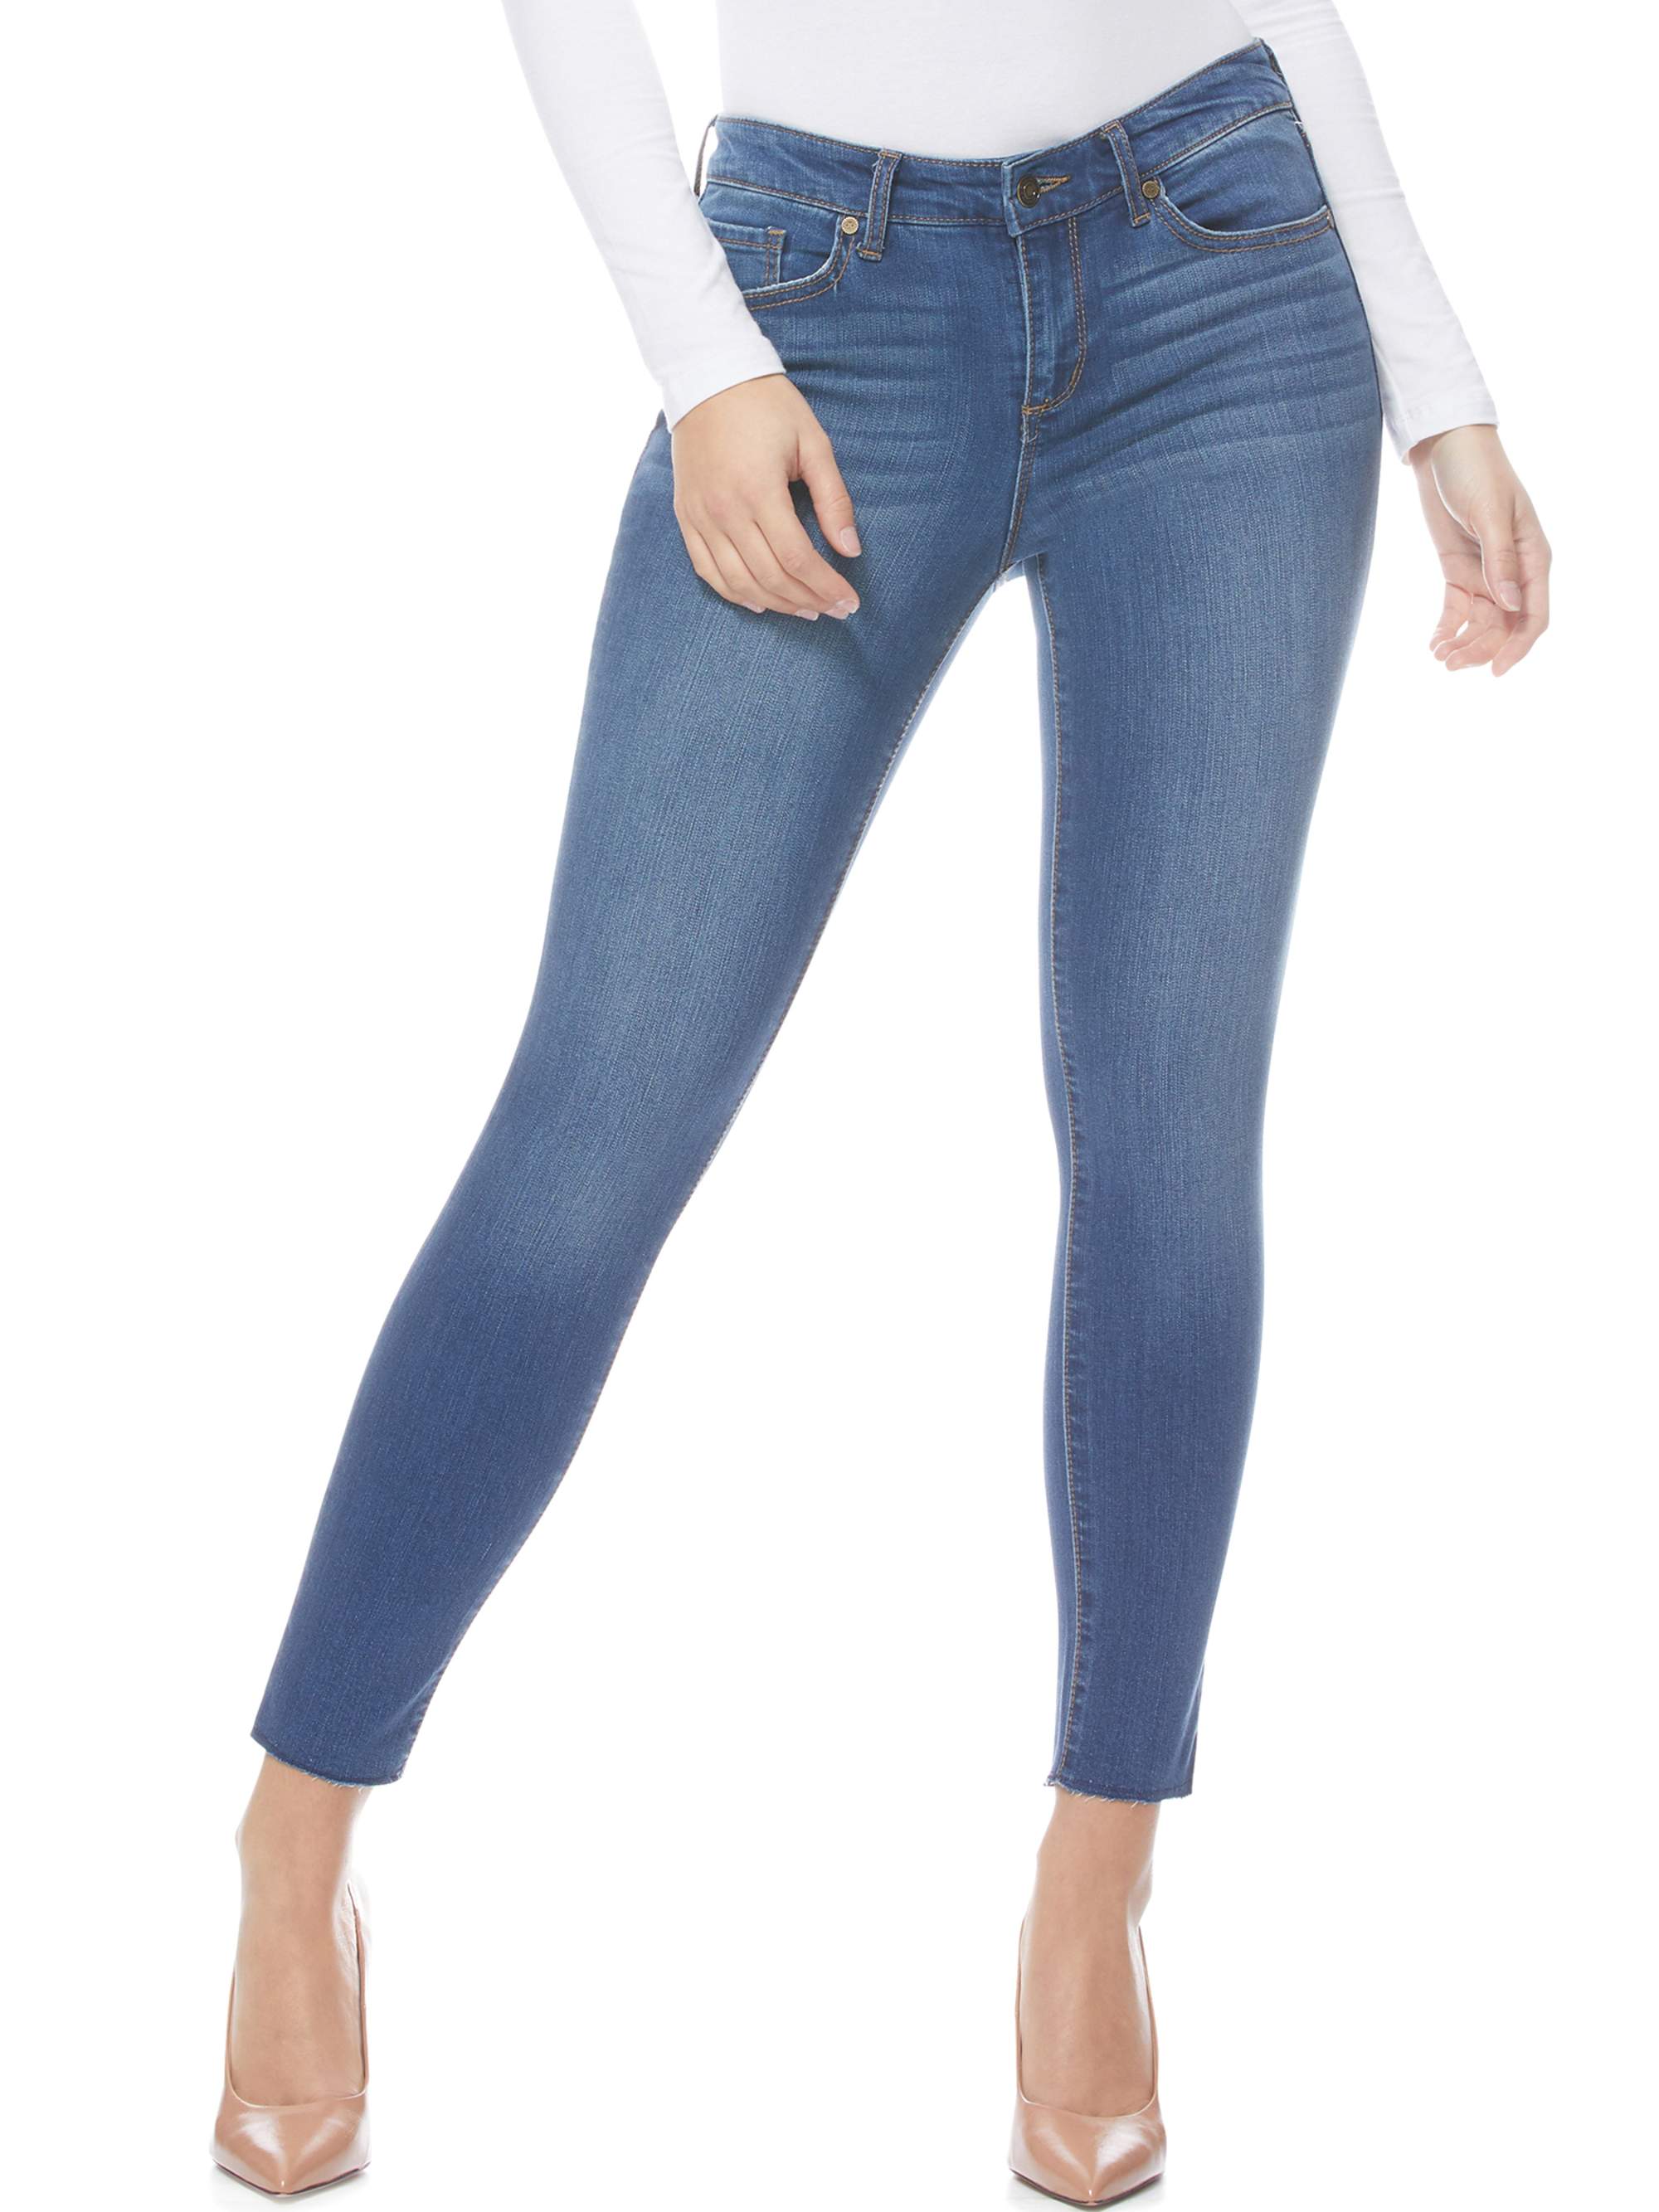 Sofia Jeans by Sofia Vergara Women's Skinny Mid Rise Stretch Ankle Jeans